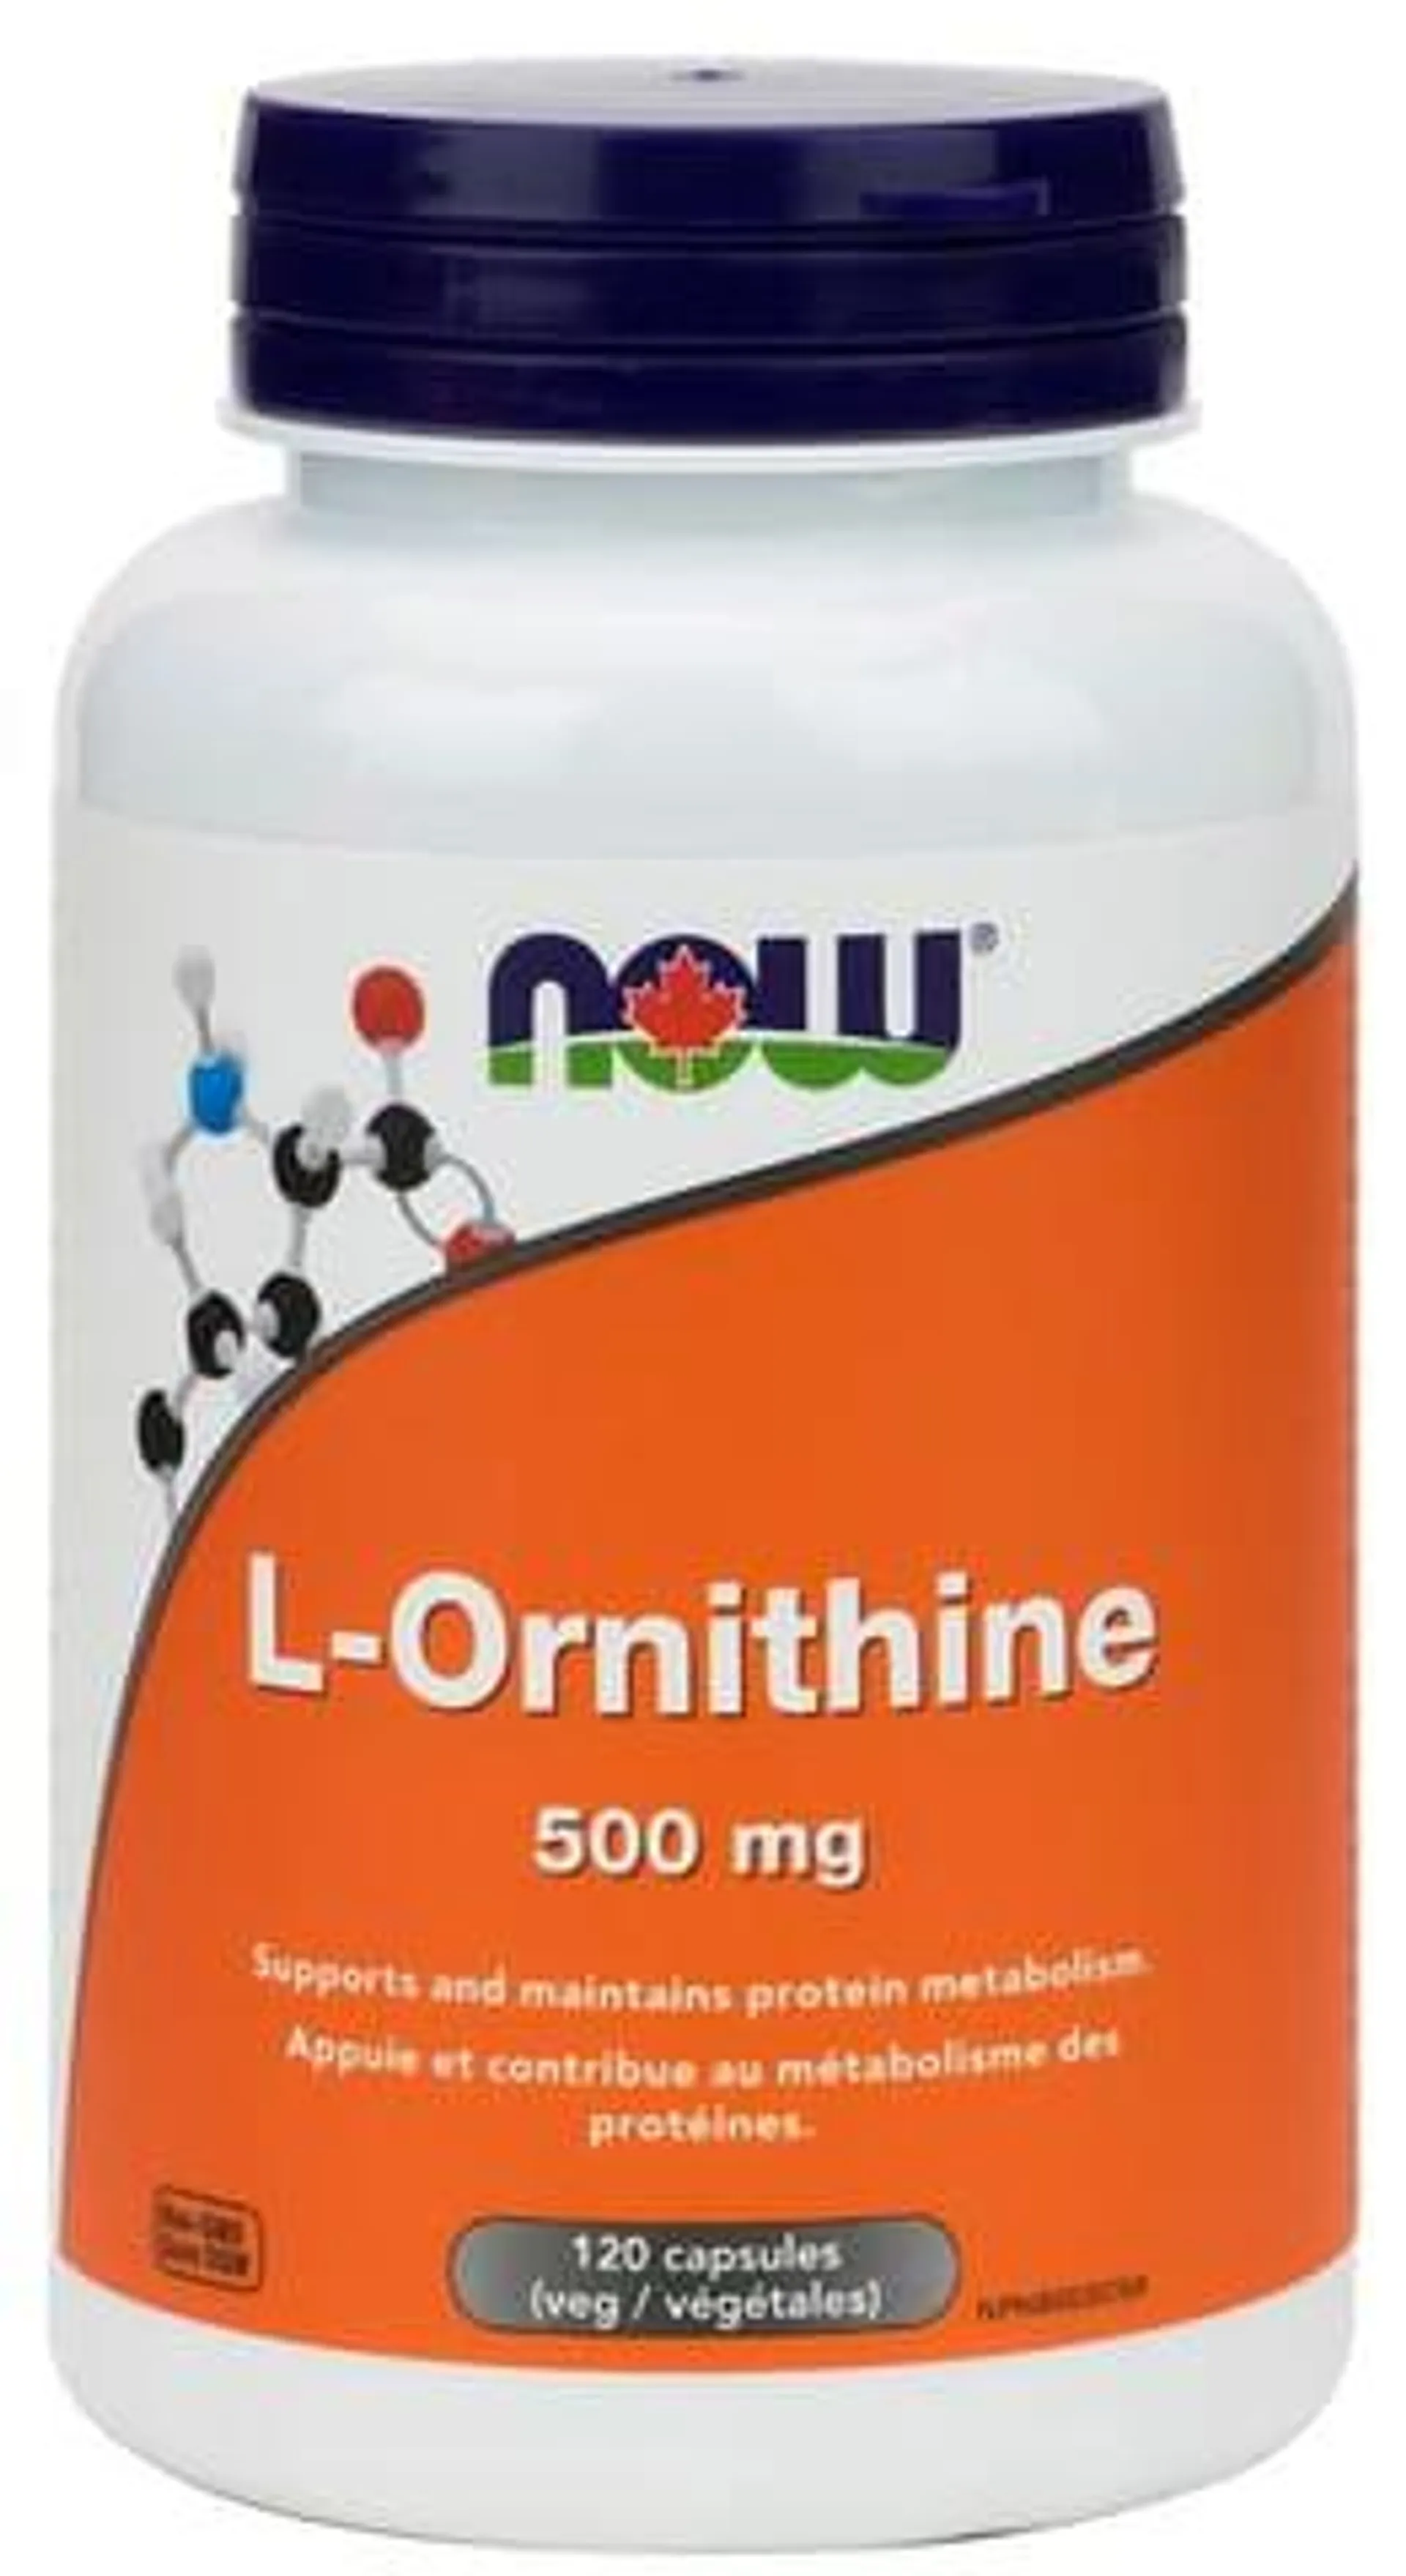 Acides aminés - L-Ornithine 500 mg